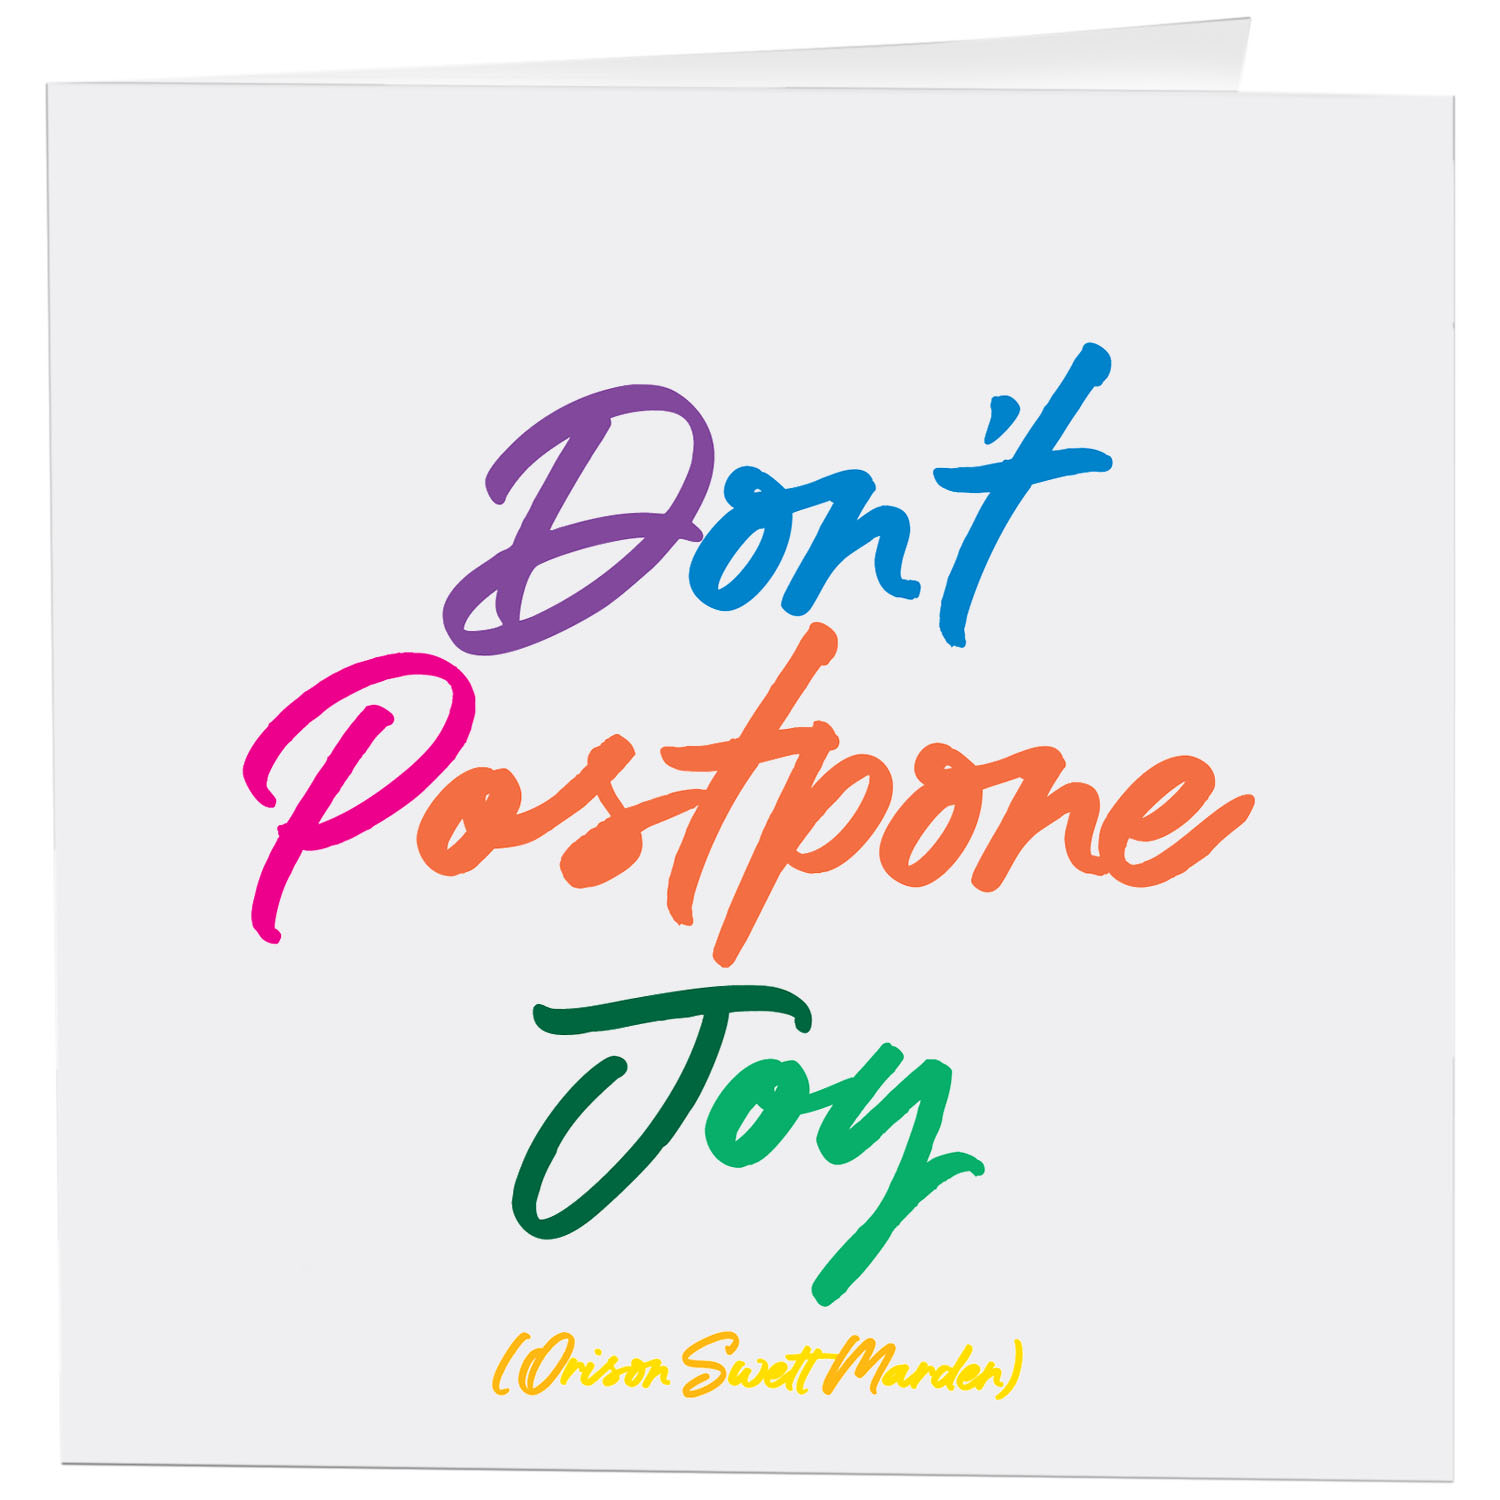 Greeting Card: Don't Postpone Joy (Orison Swett Marden)